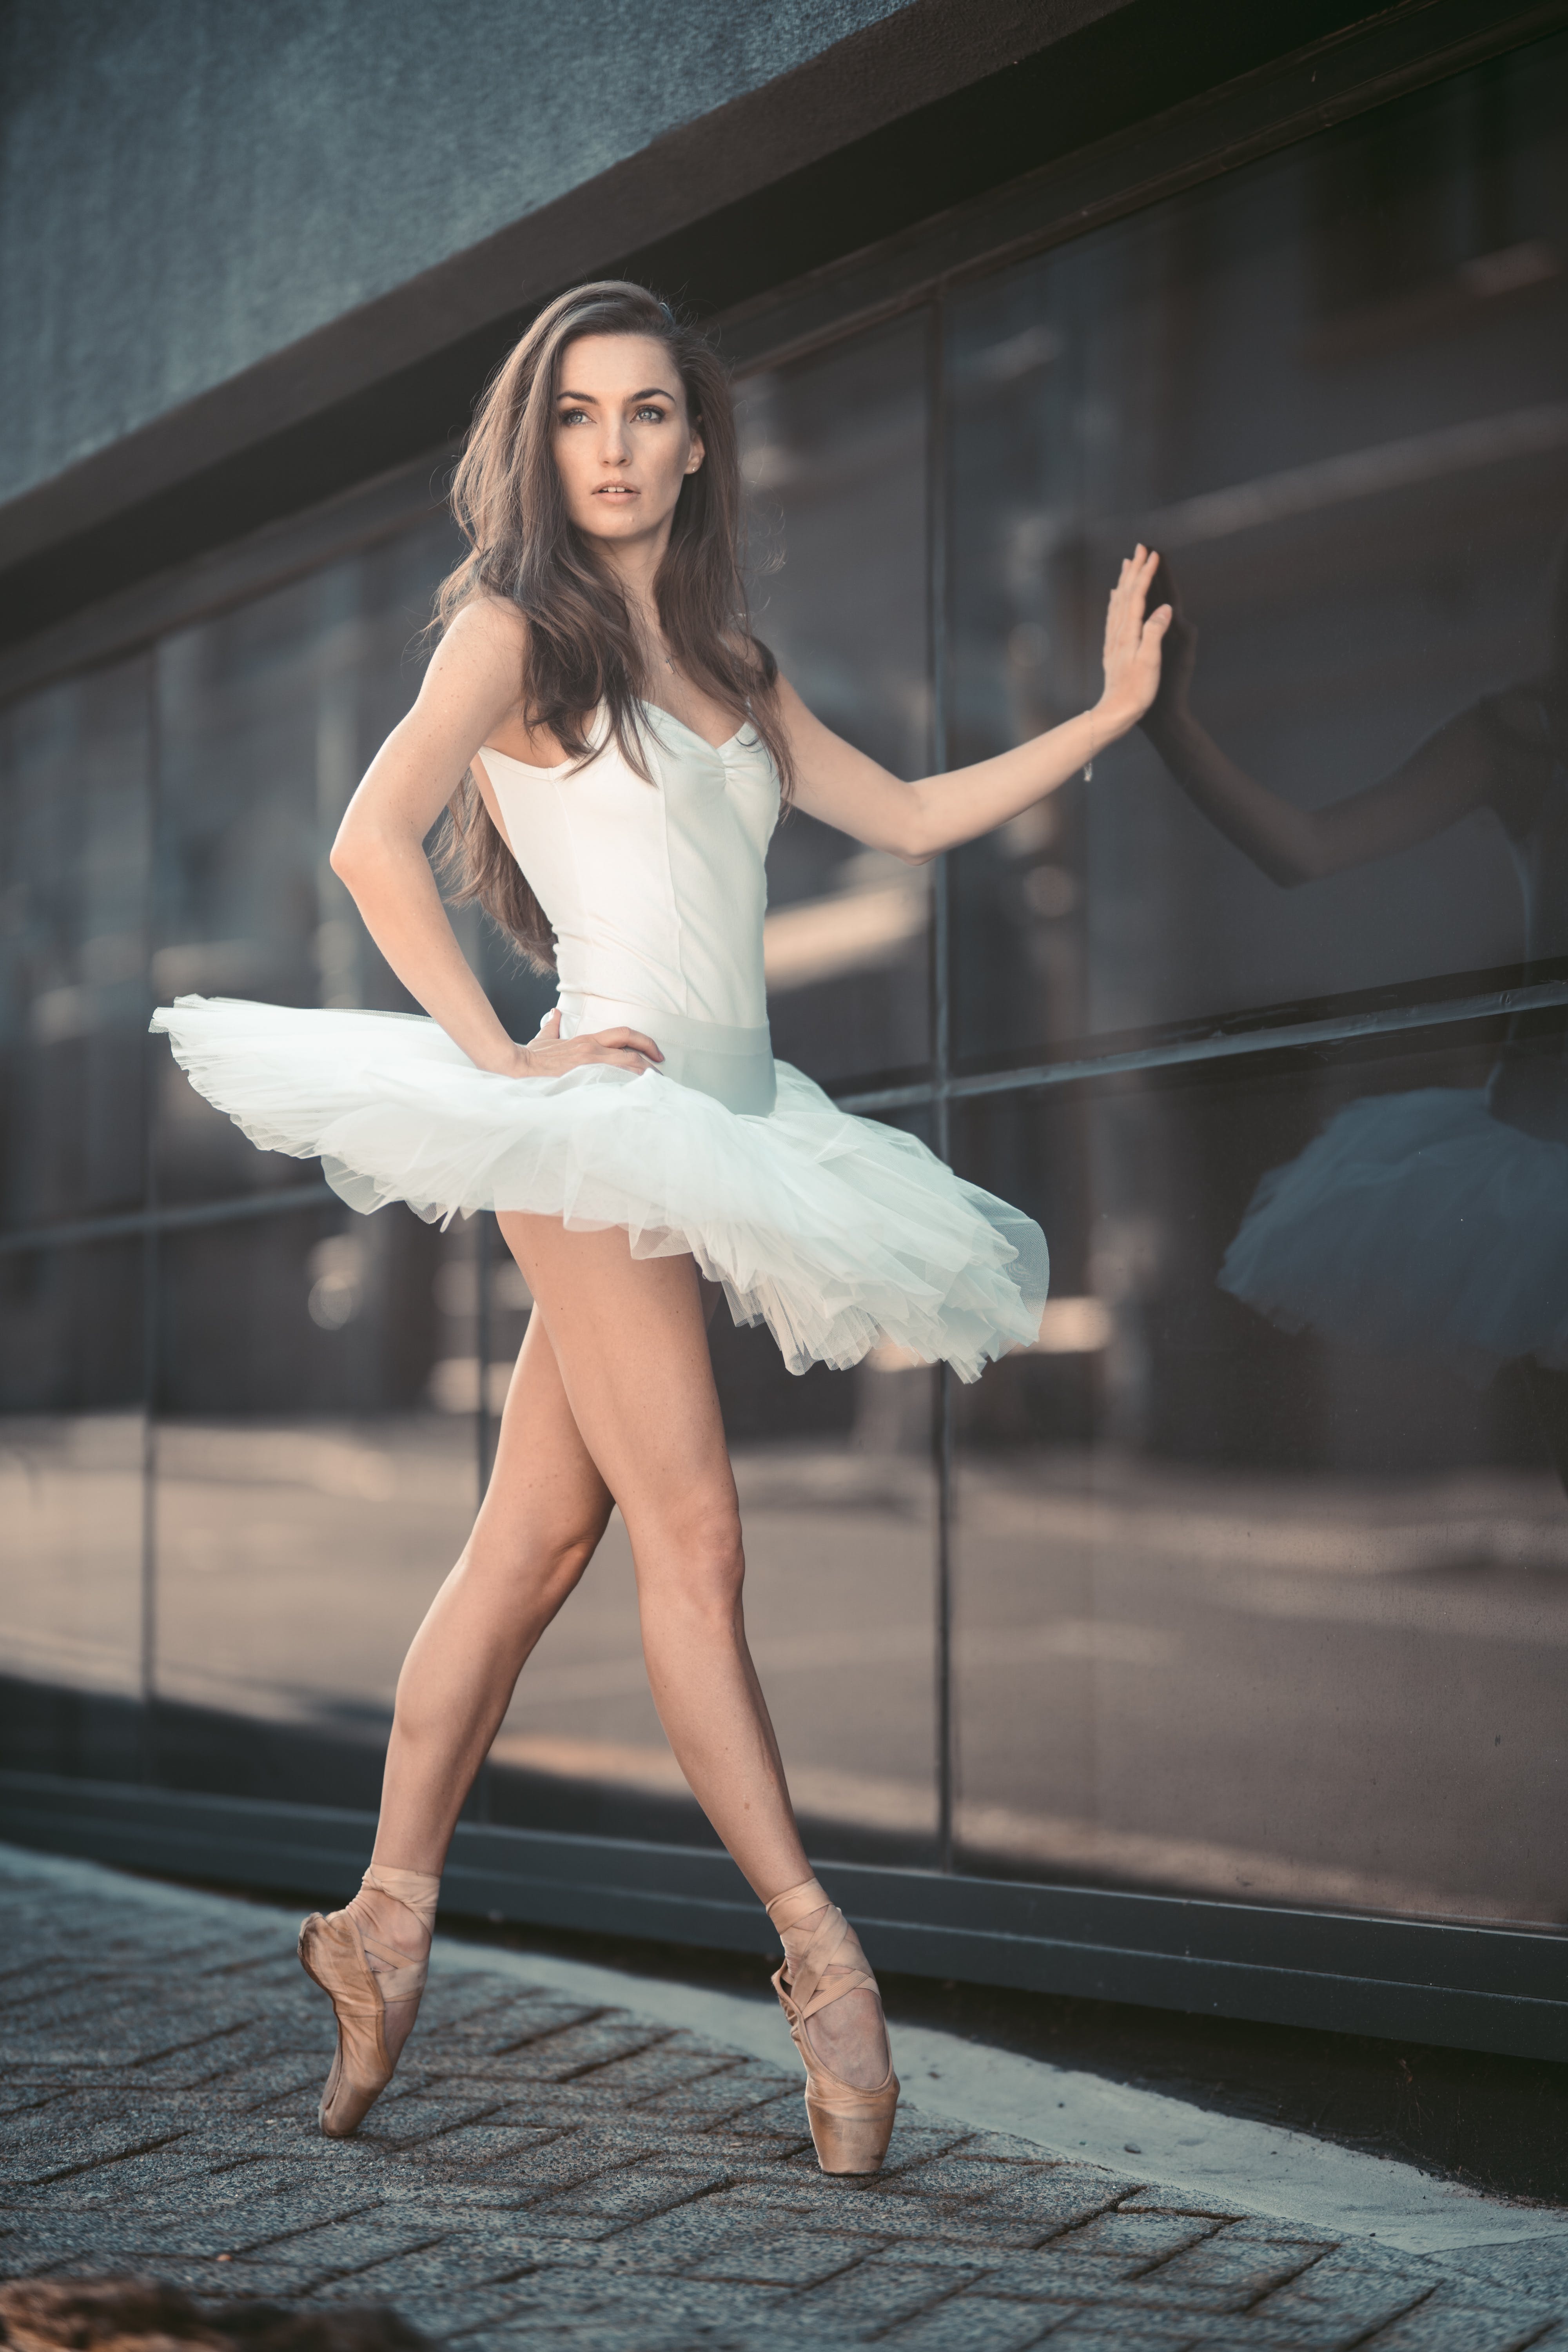 A ballet dancer wearing a Tutu. | Source: Pexels